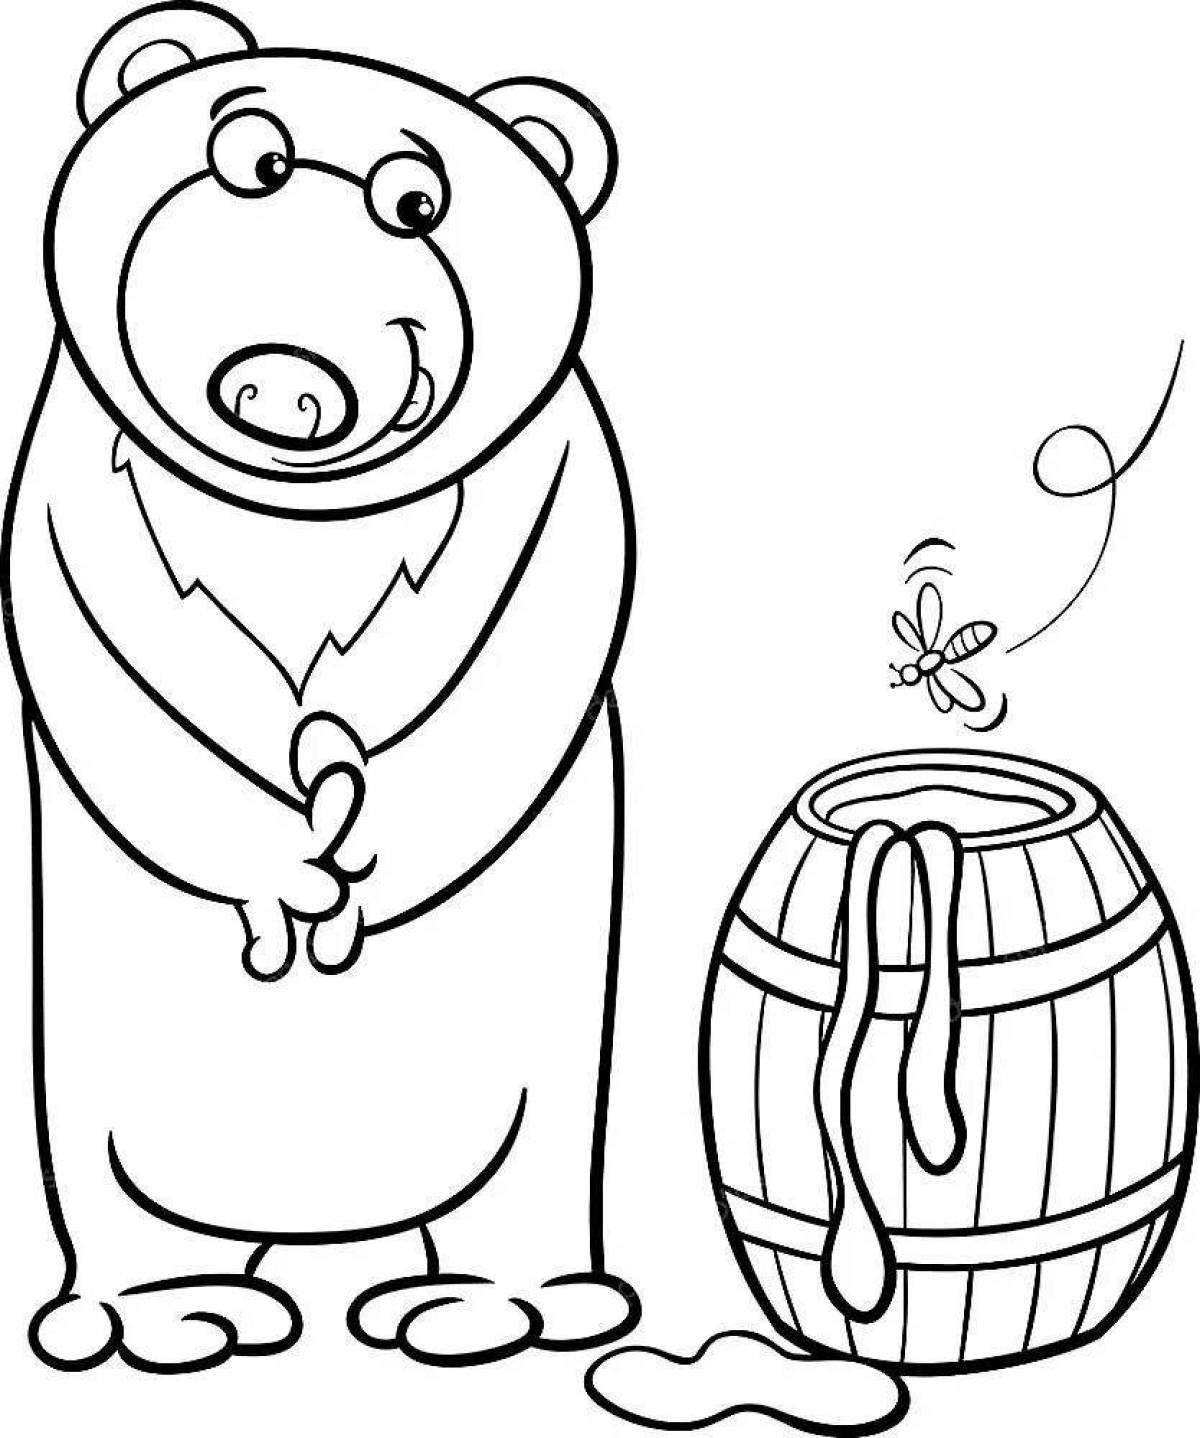 Rampant barrel of honey coloring page